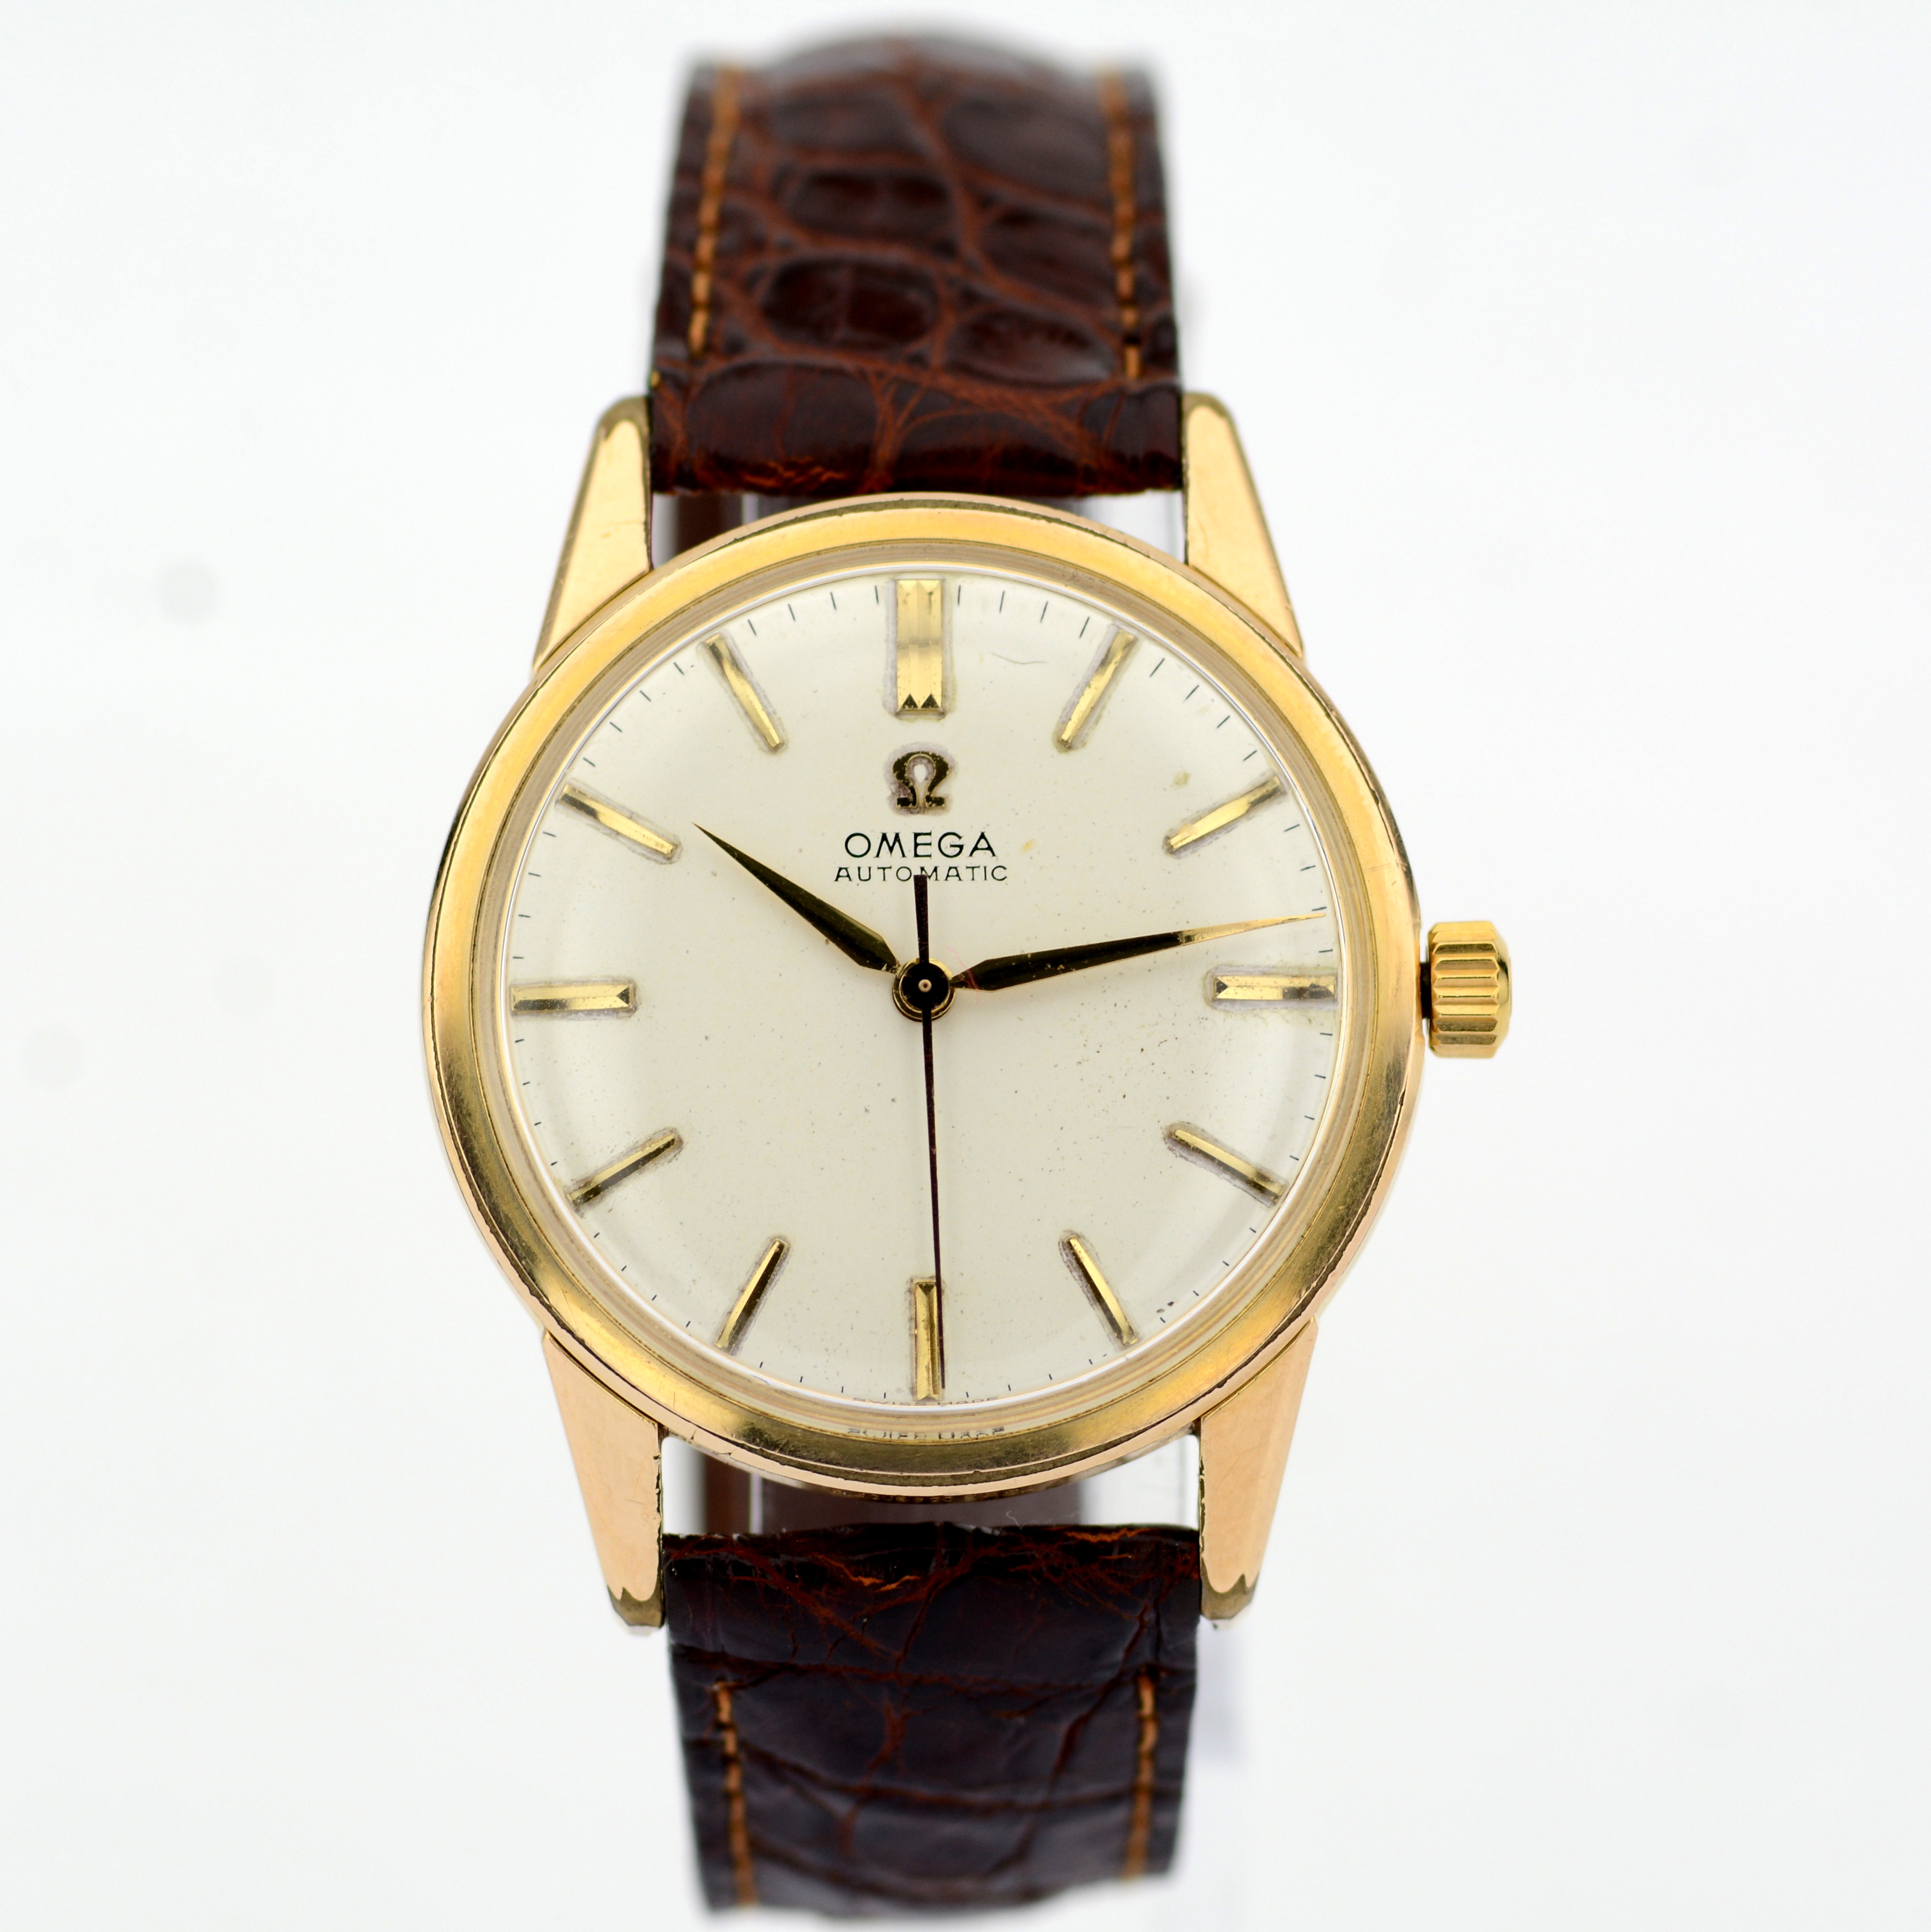 Omega / Vintage Automatic - Gentlmen's Gold/Steel Wrist Watch - Image 8 of 8